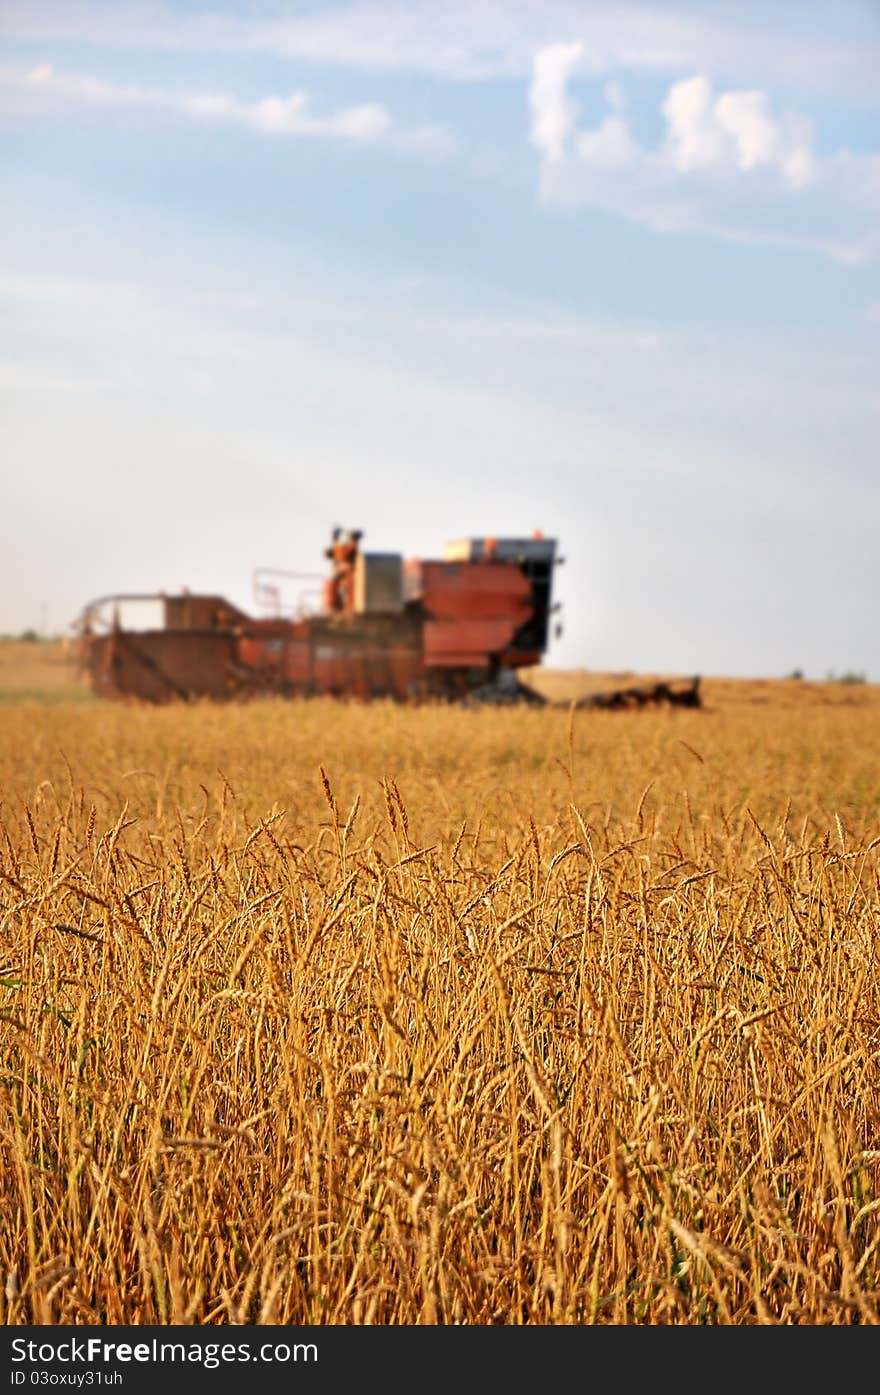 Harvester in wheat field. Harvesting. Harvester in wheat field. Harvesting.